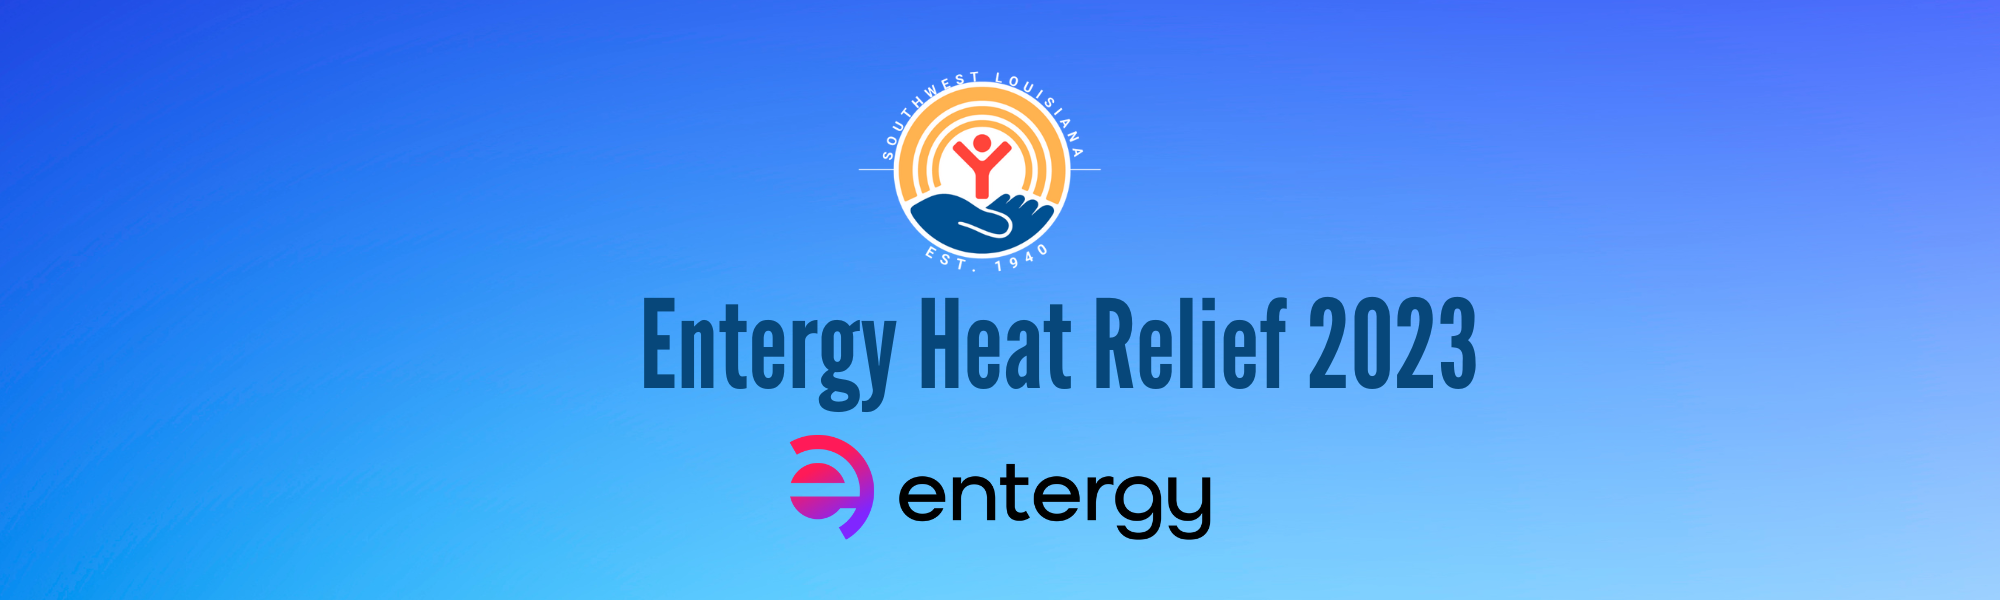 heat relief header with logos